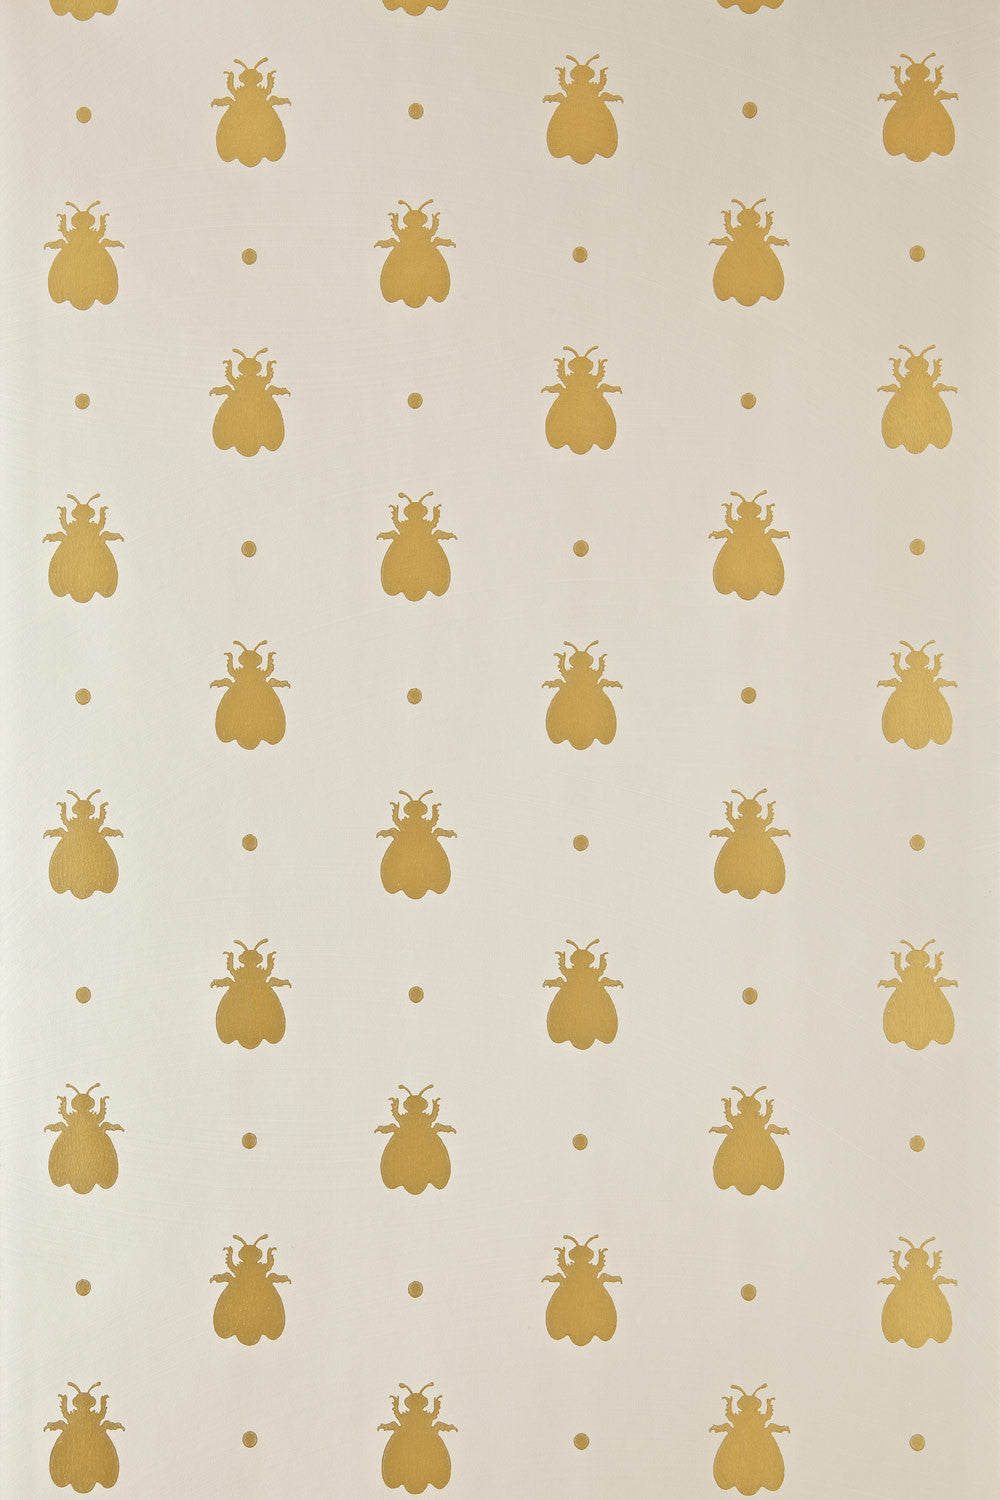 bumblebee bp 525